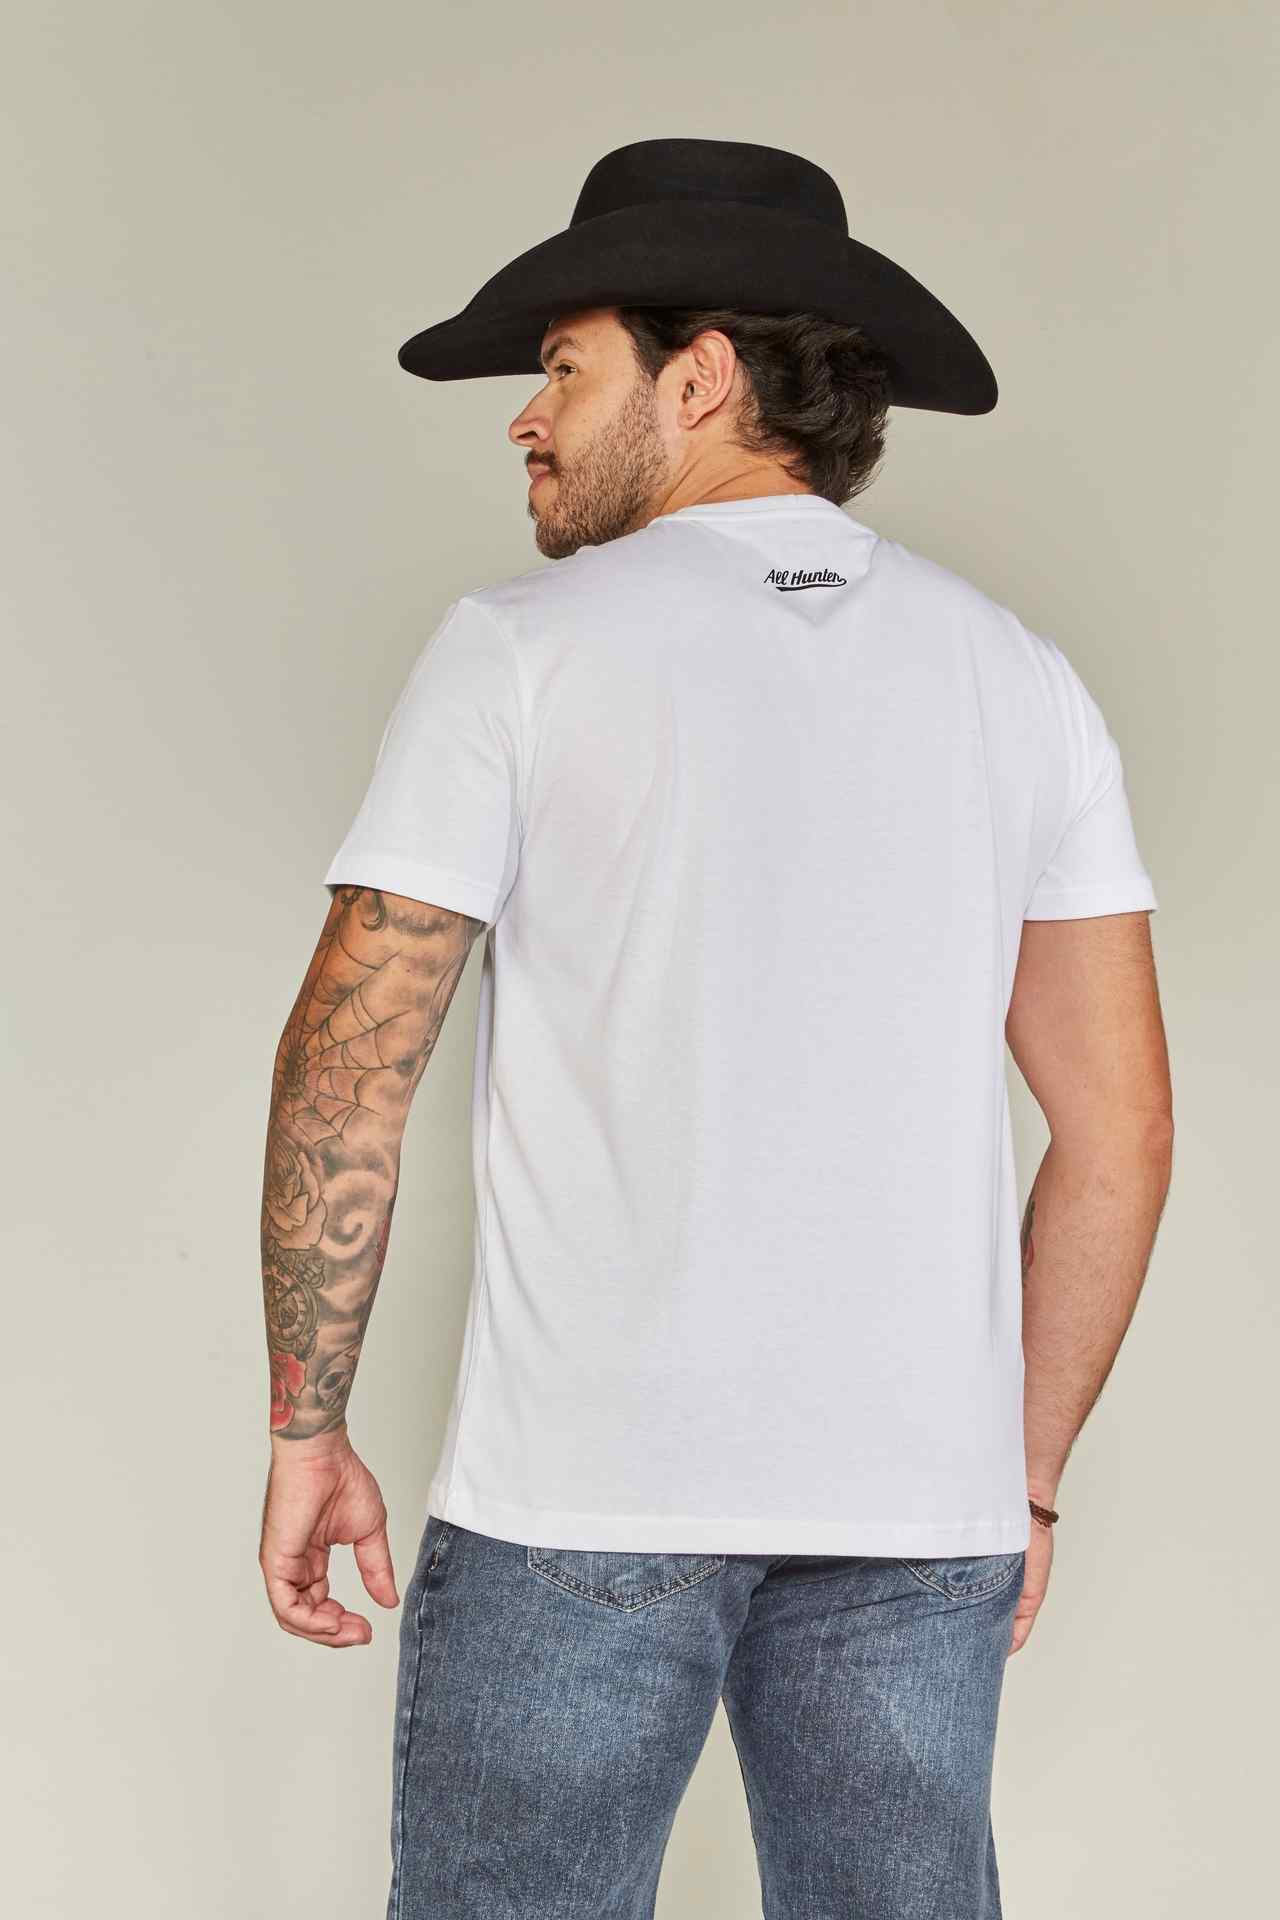 Camiseta All Hunter Basic 2211 Branco